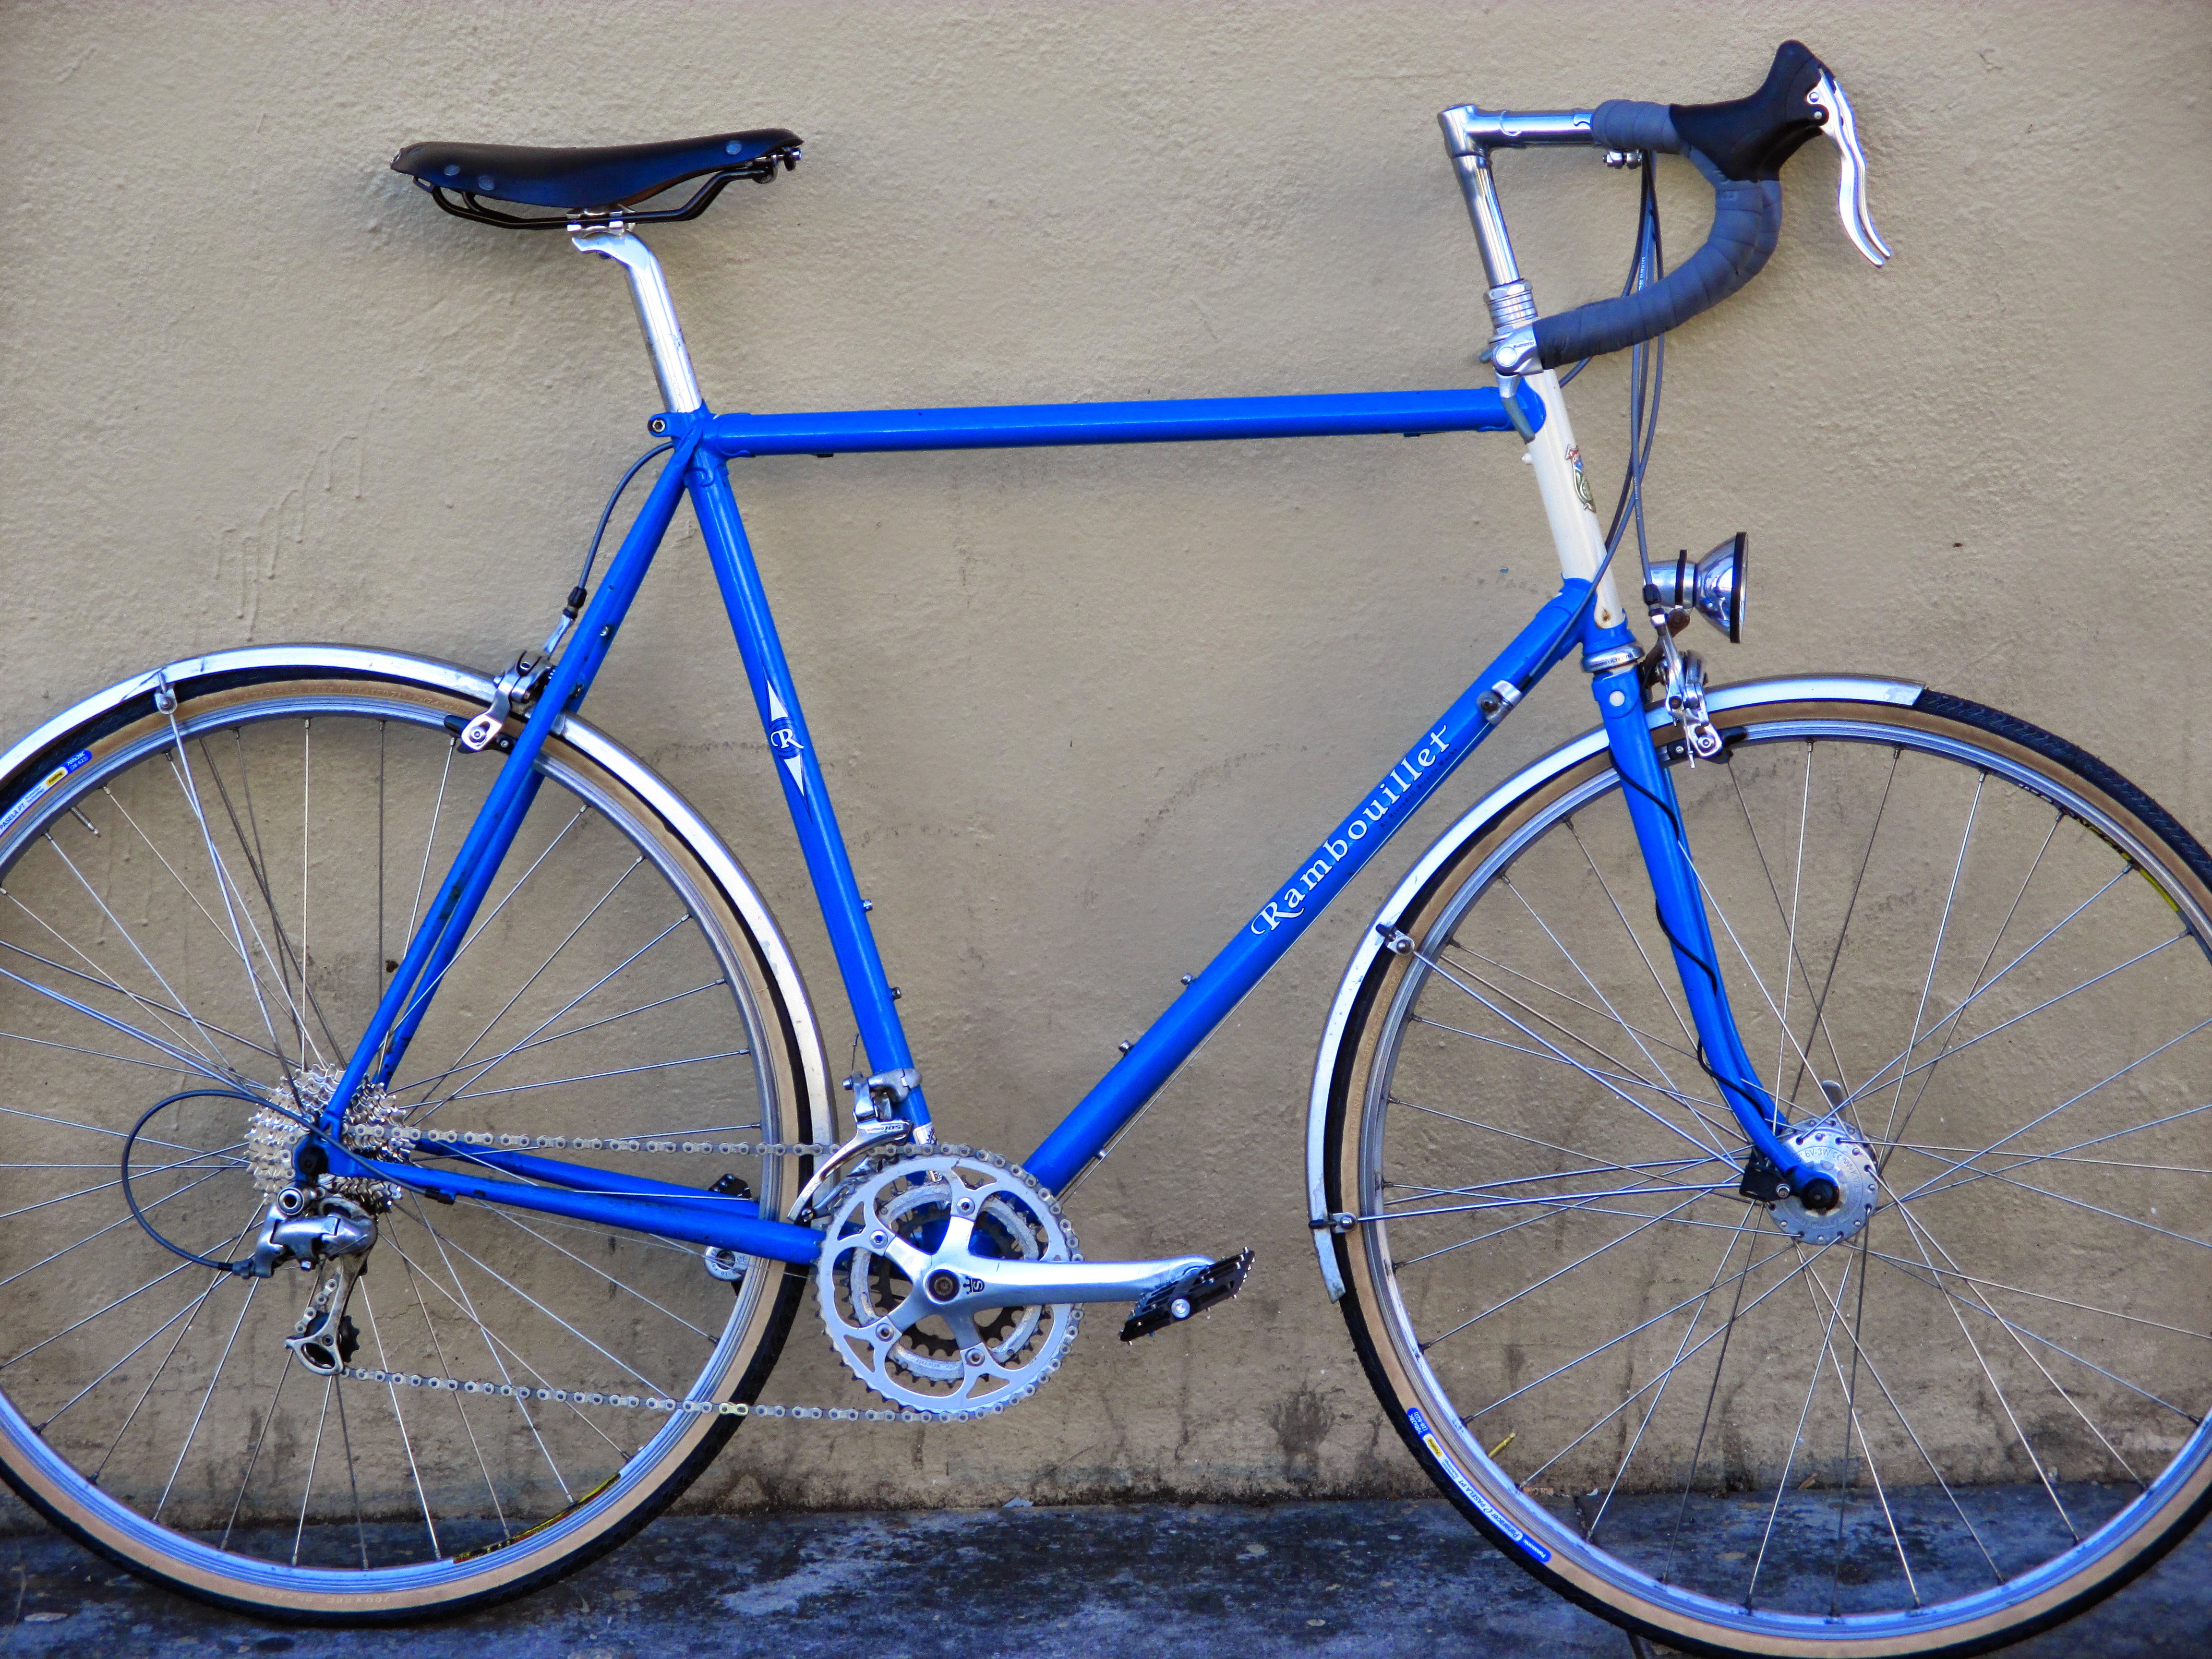 59cm Rivendell Rambouillet @ Pedal Revolution Refurbished Bike Update